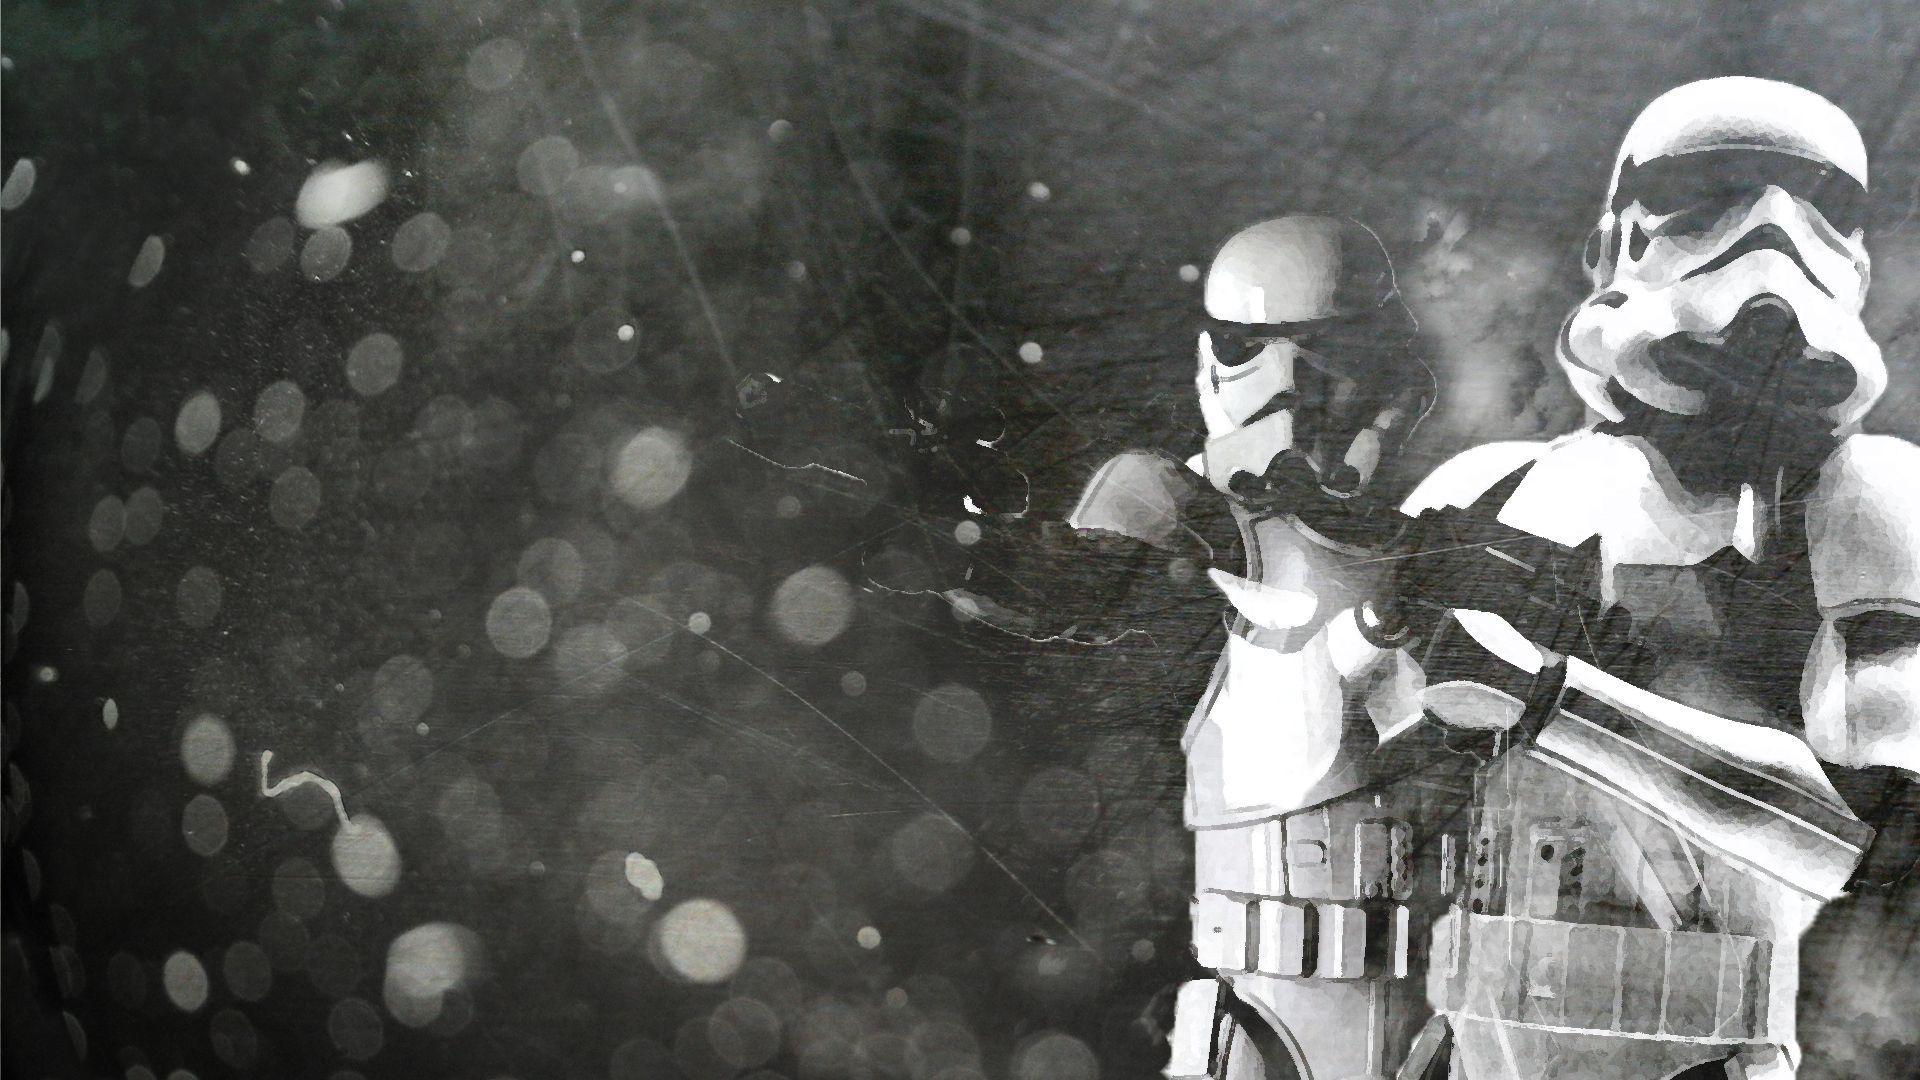 Imperial Stormtrooper Wallpaper